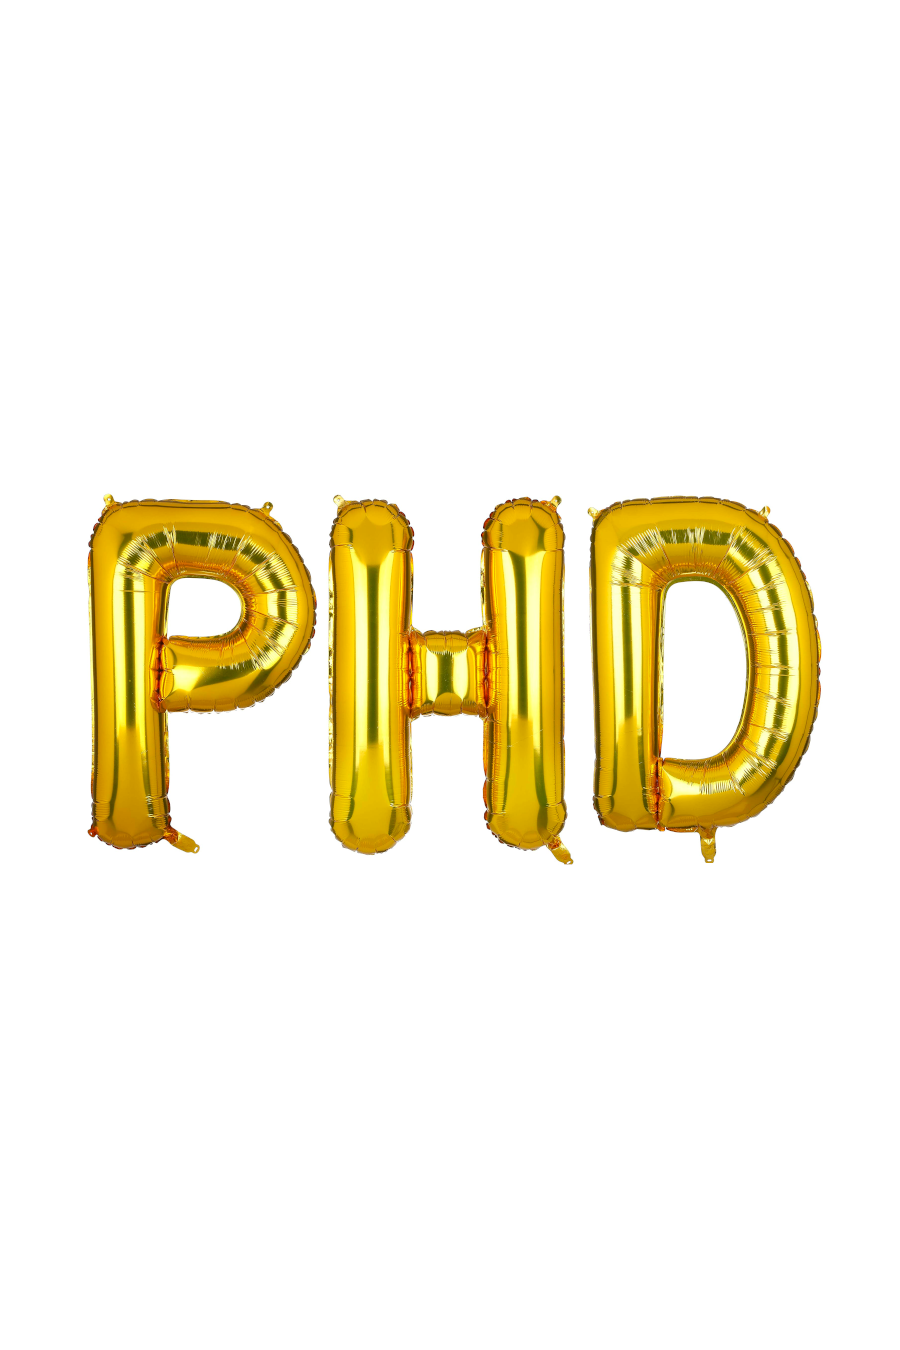 PhD Graduation Balloons - 40